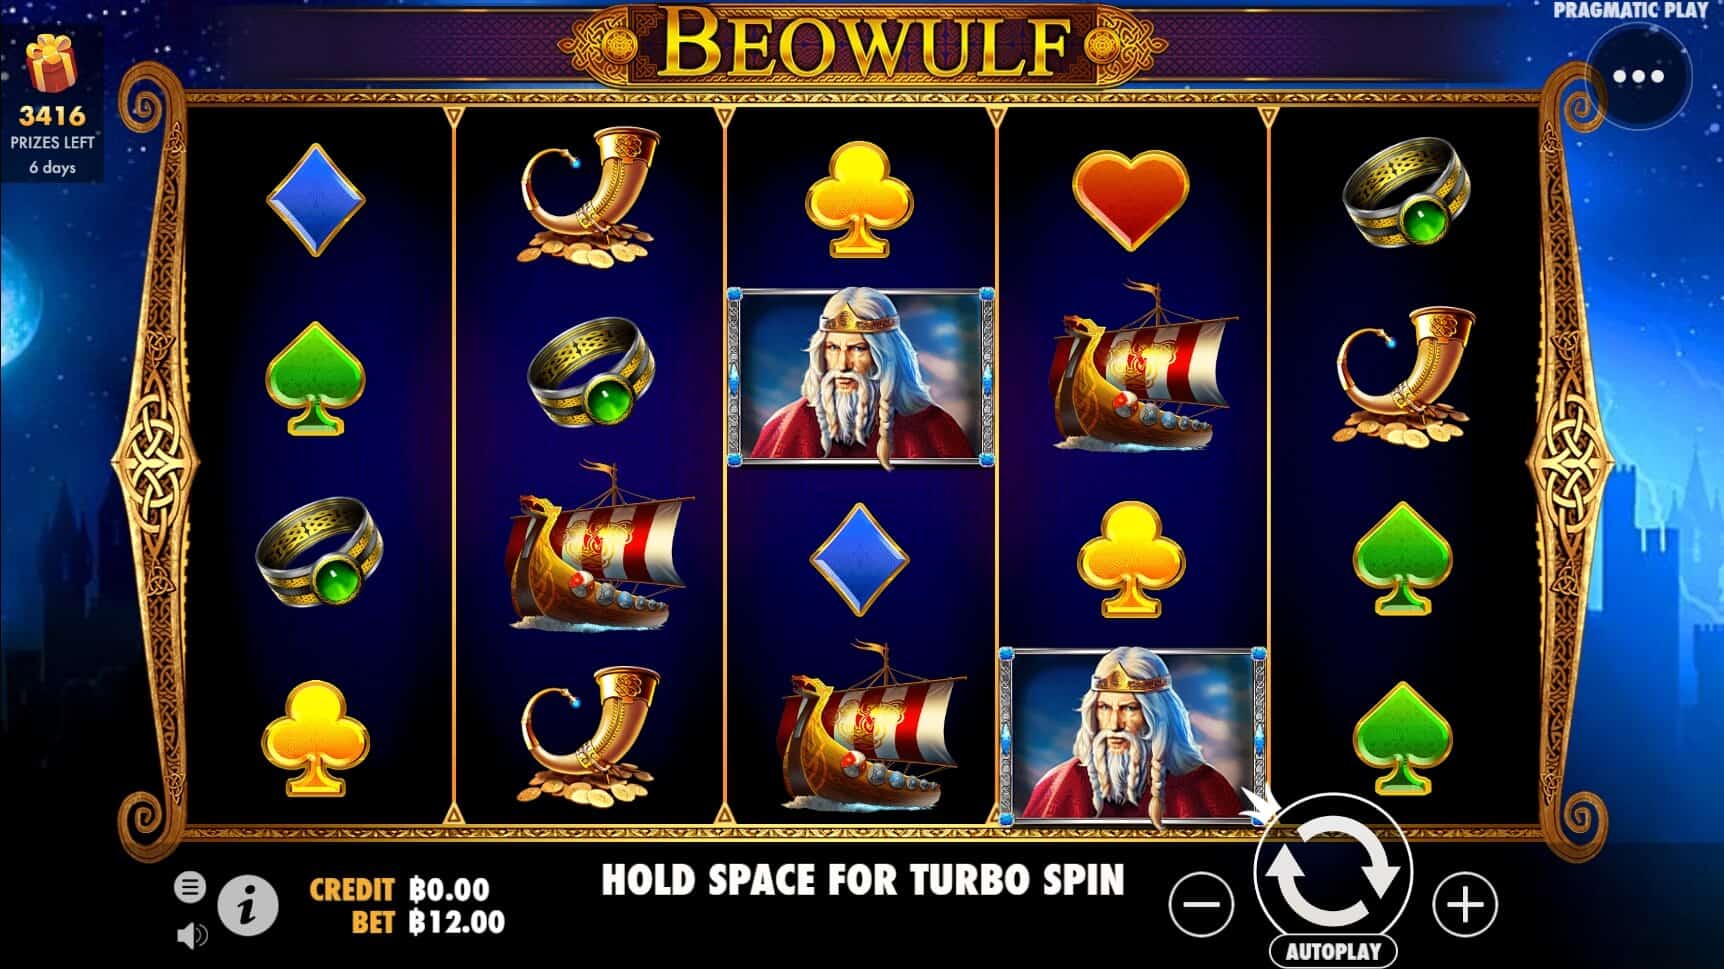 Beowulf เกมสล็อต เว็บตรง จากค่าย Pragmatic Play joker slot